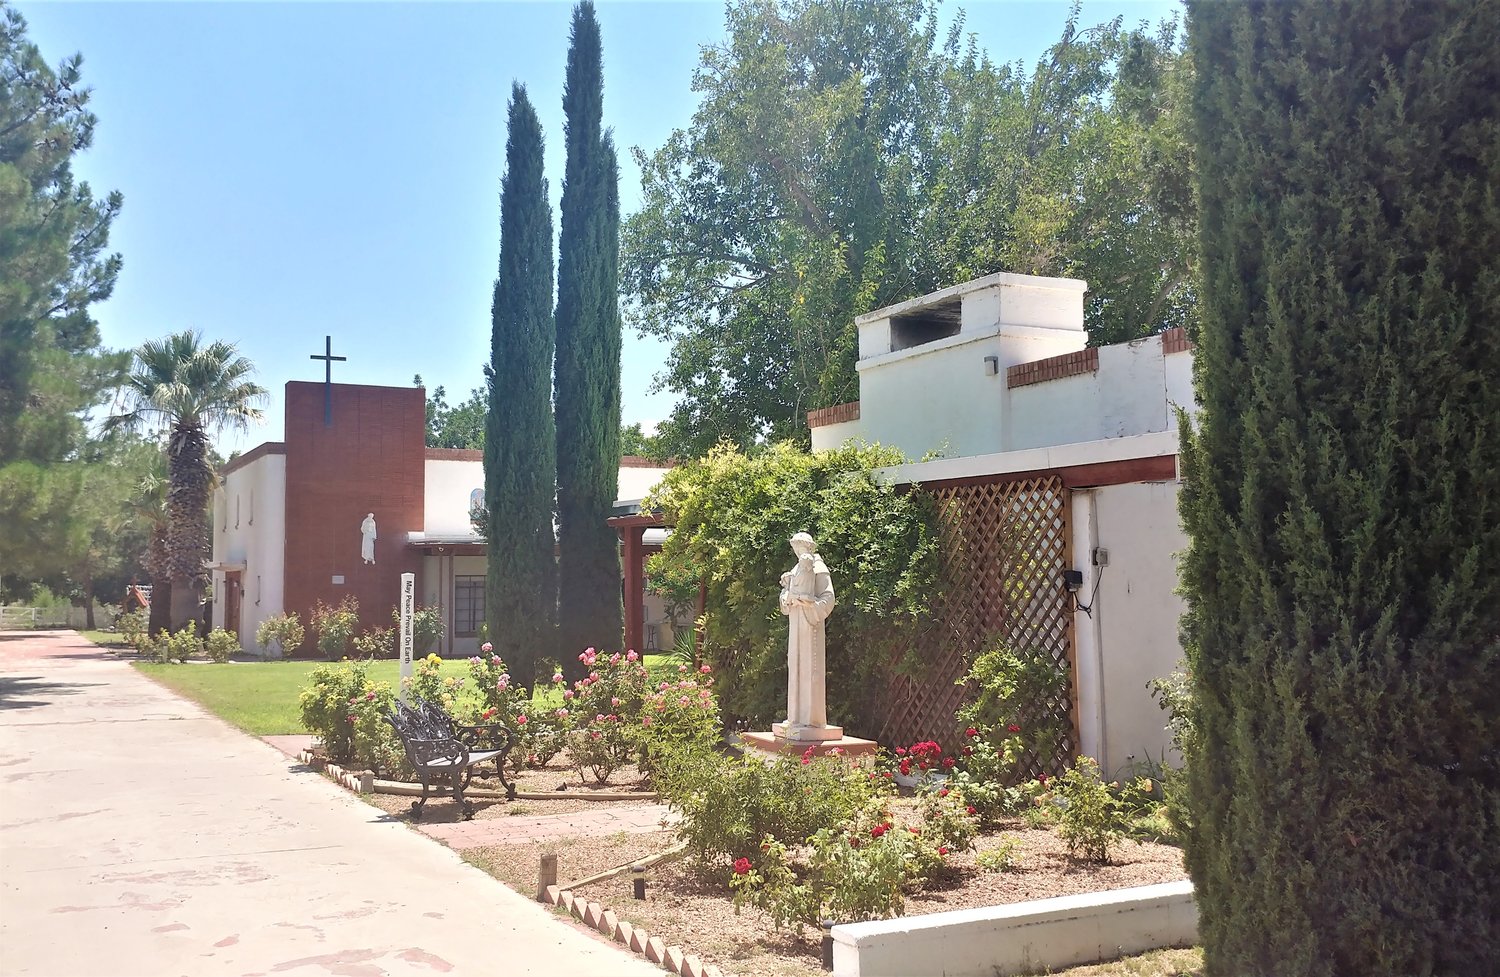 Holy Cross Retreat Center in Mesilla Park.